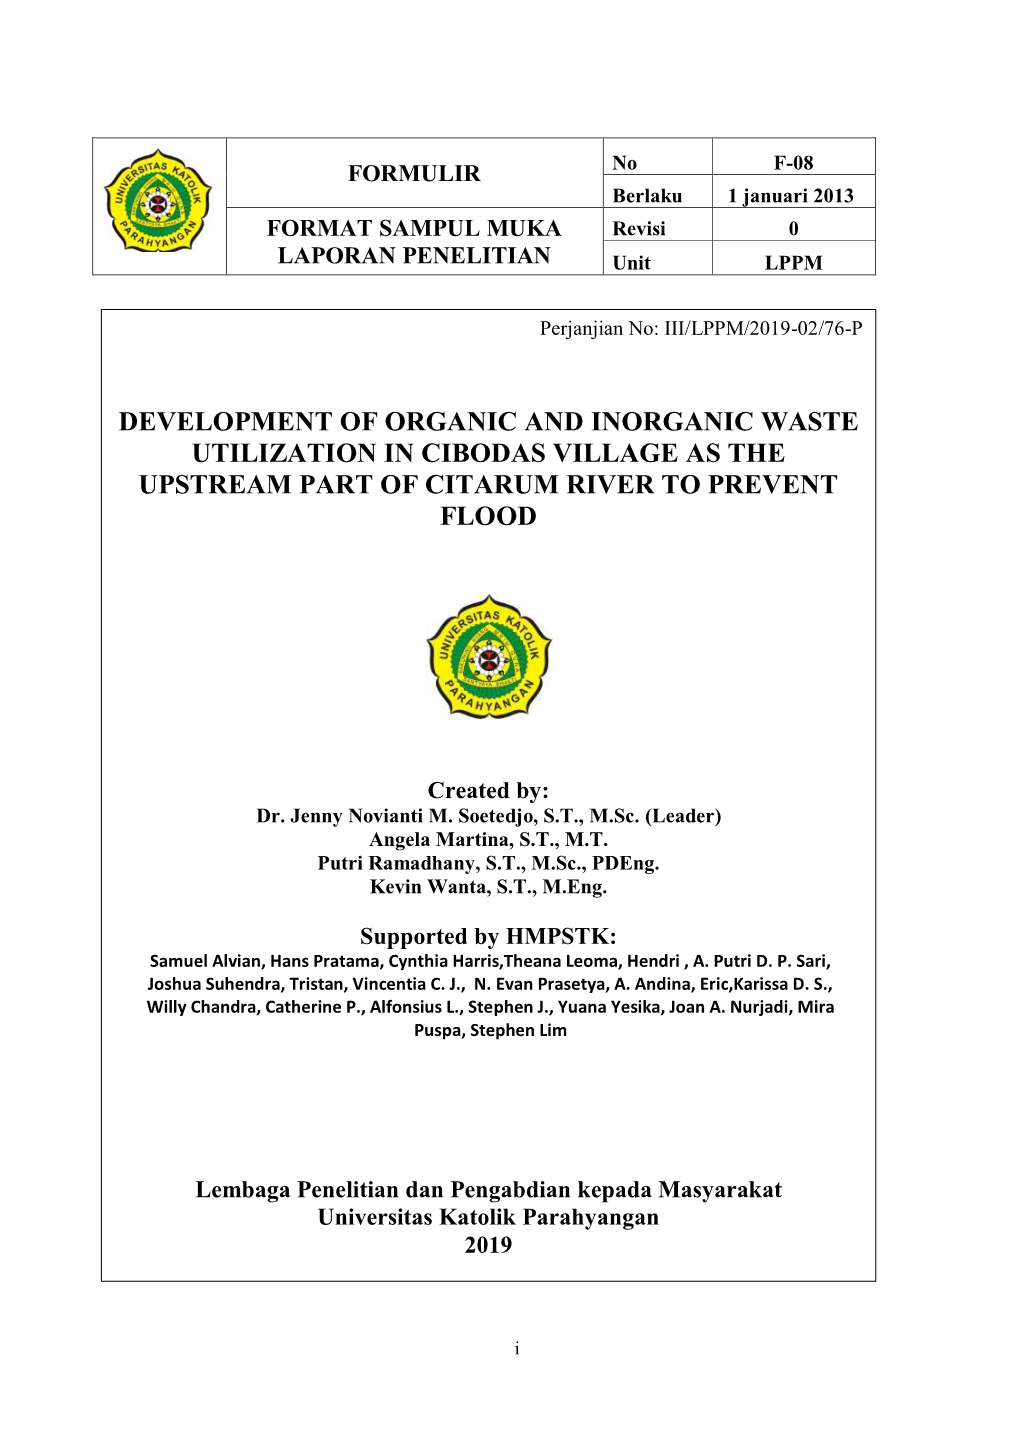 Development of Organic and Inorganic Waste Utilization